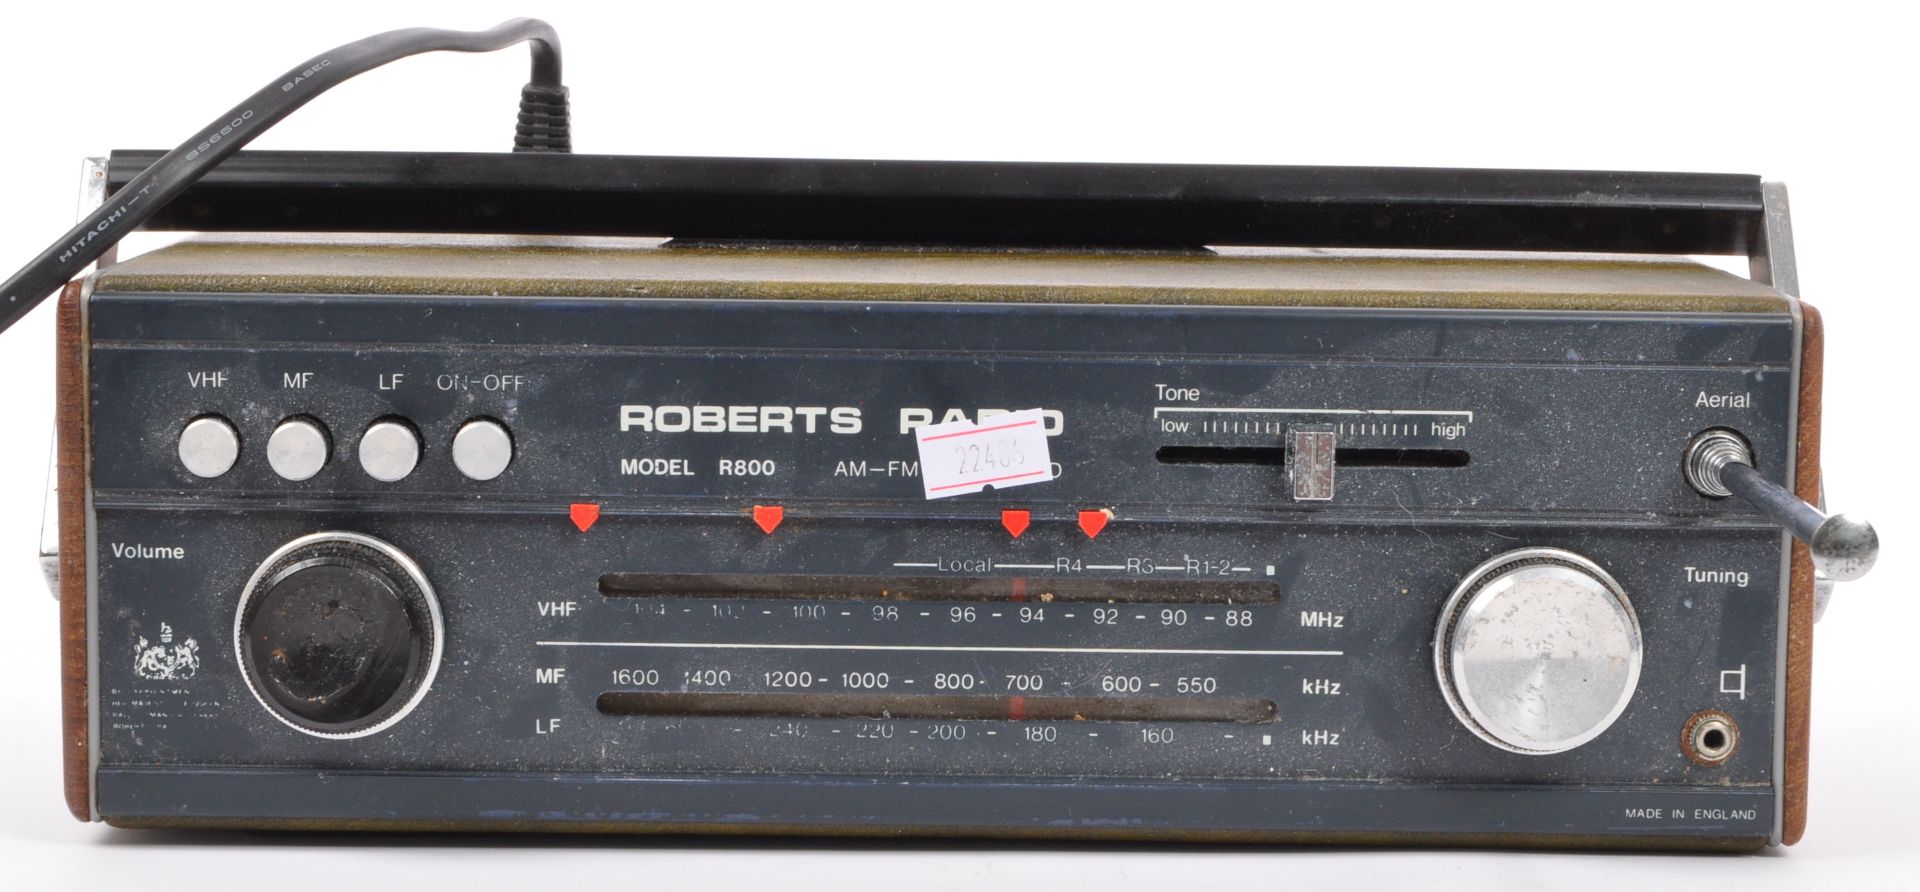 VINTAGE ROBERTS RAMBLER MODEL R800 RADIO - Image 2 of 6